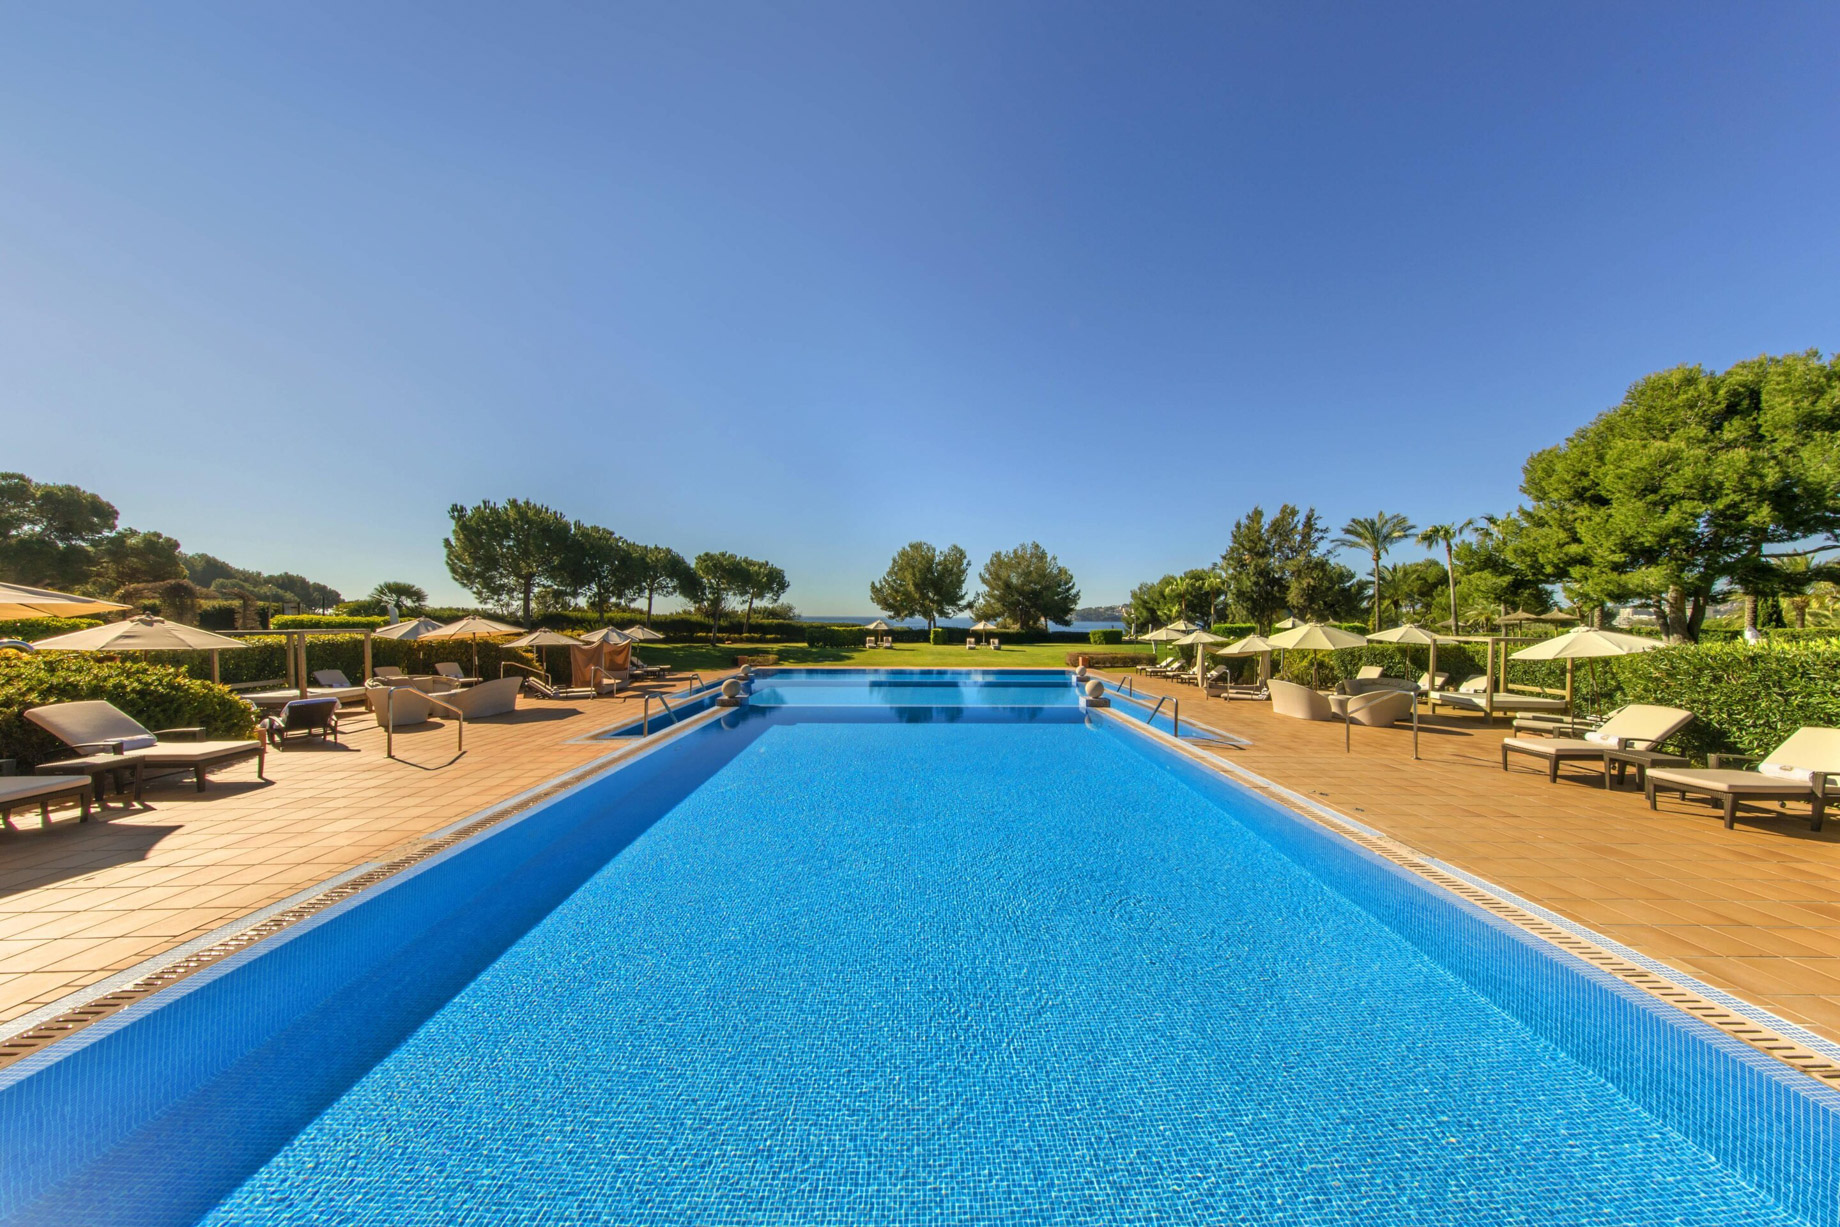 The St. Regis Mardavall Mallorca Resort - Palma de Mallorca, Spain - Pool